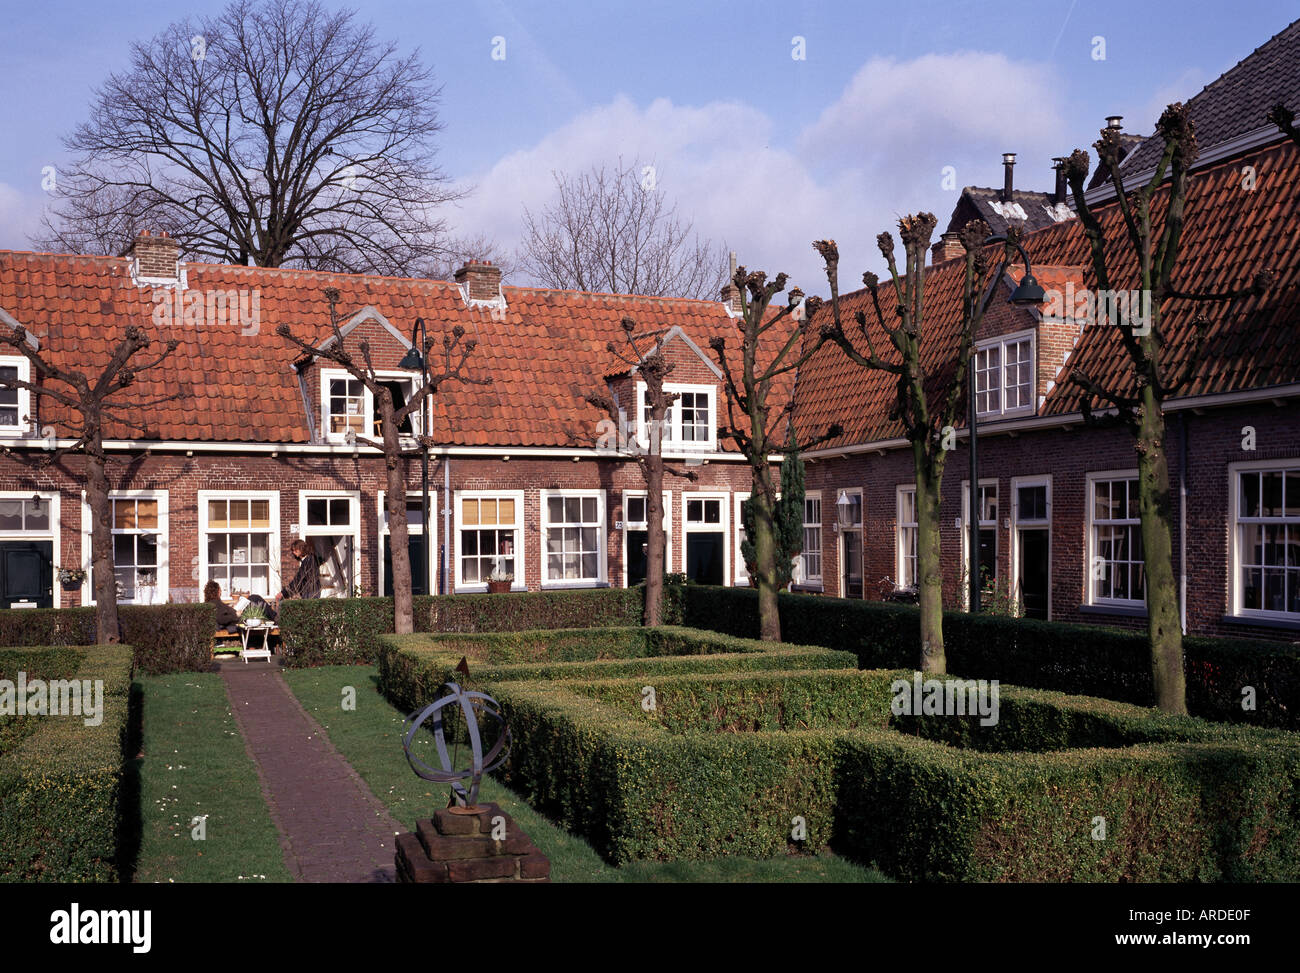 Delft, Klaeuwshofje, Innenhof Foto Stock